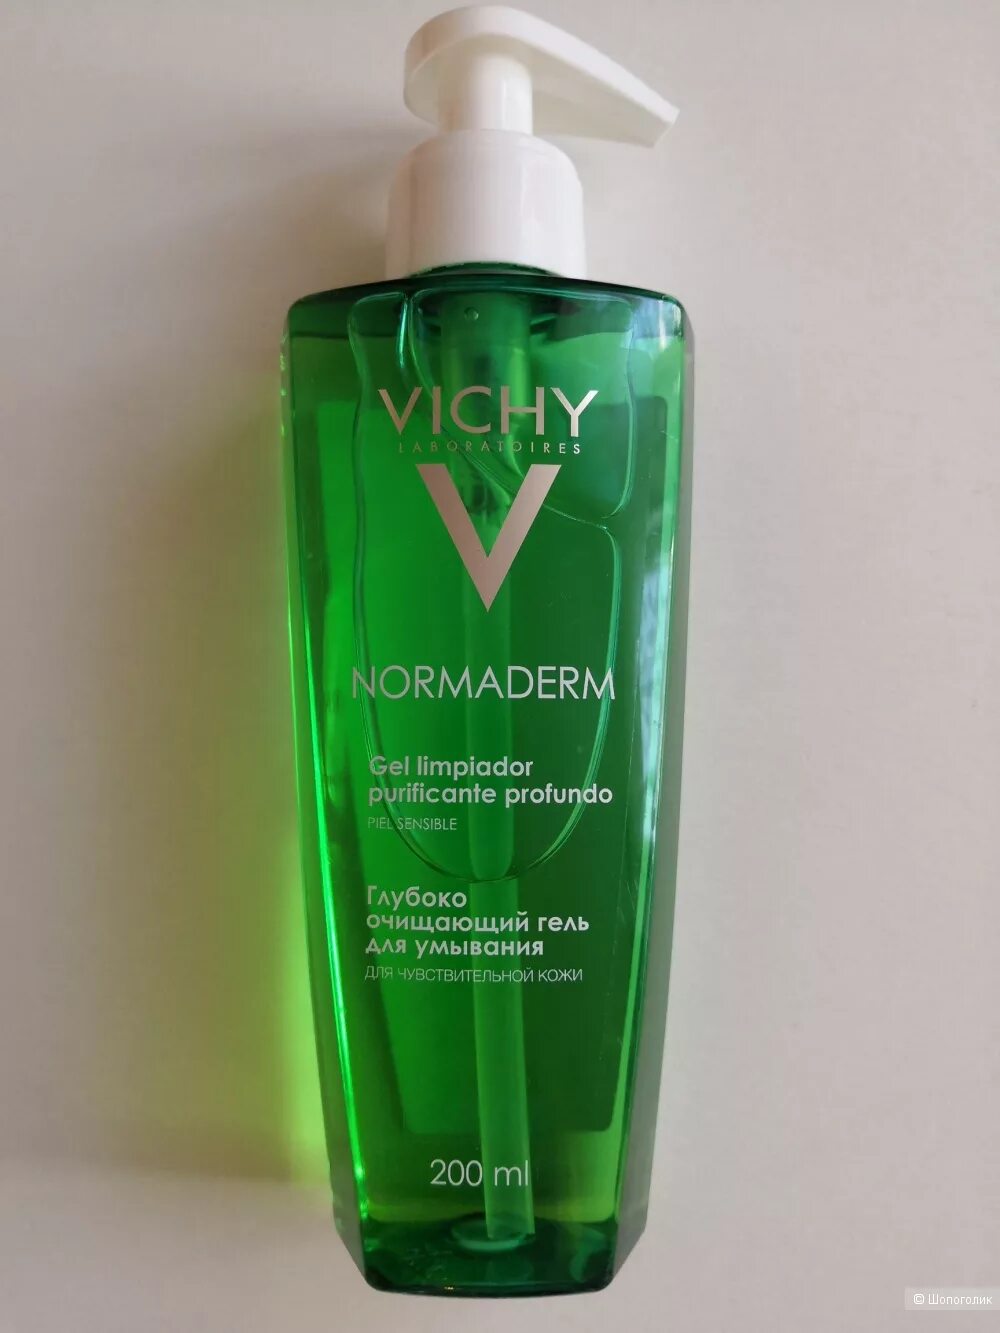 Vichy purifying gel. Виши умывалка Normaderm. Vichy Нормадерм гель. Vichy гель для умывания Normaderm 200 мл. Виши умывалка зеленая.